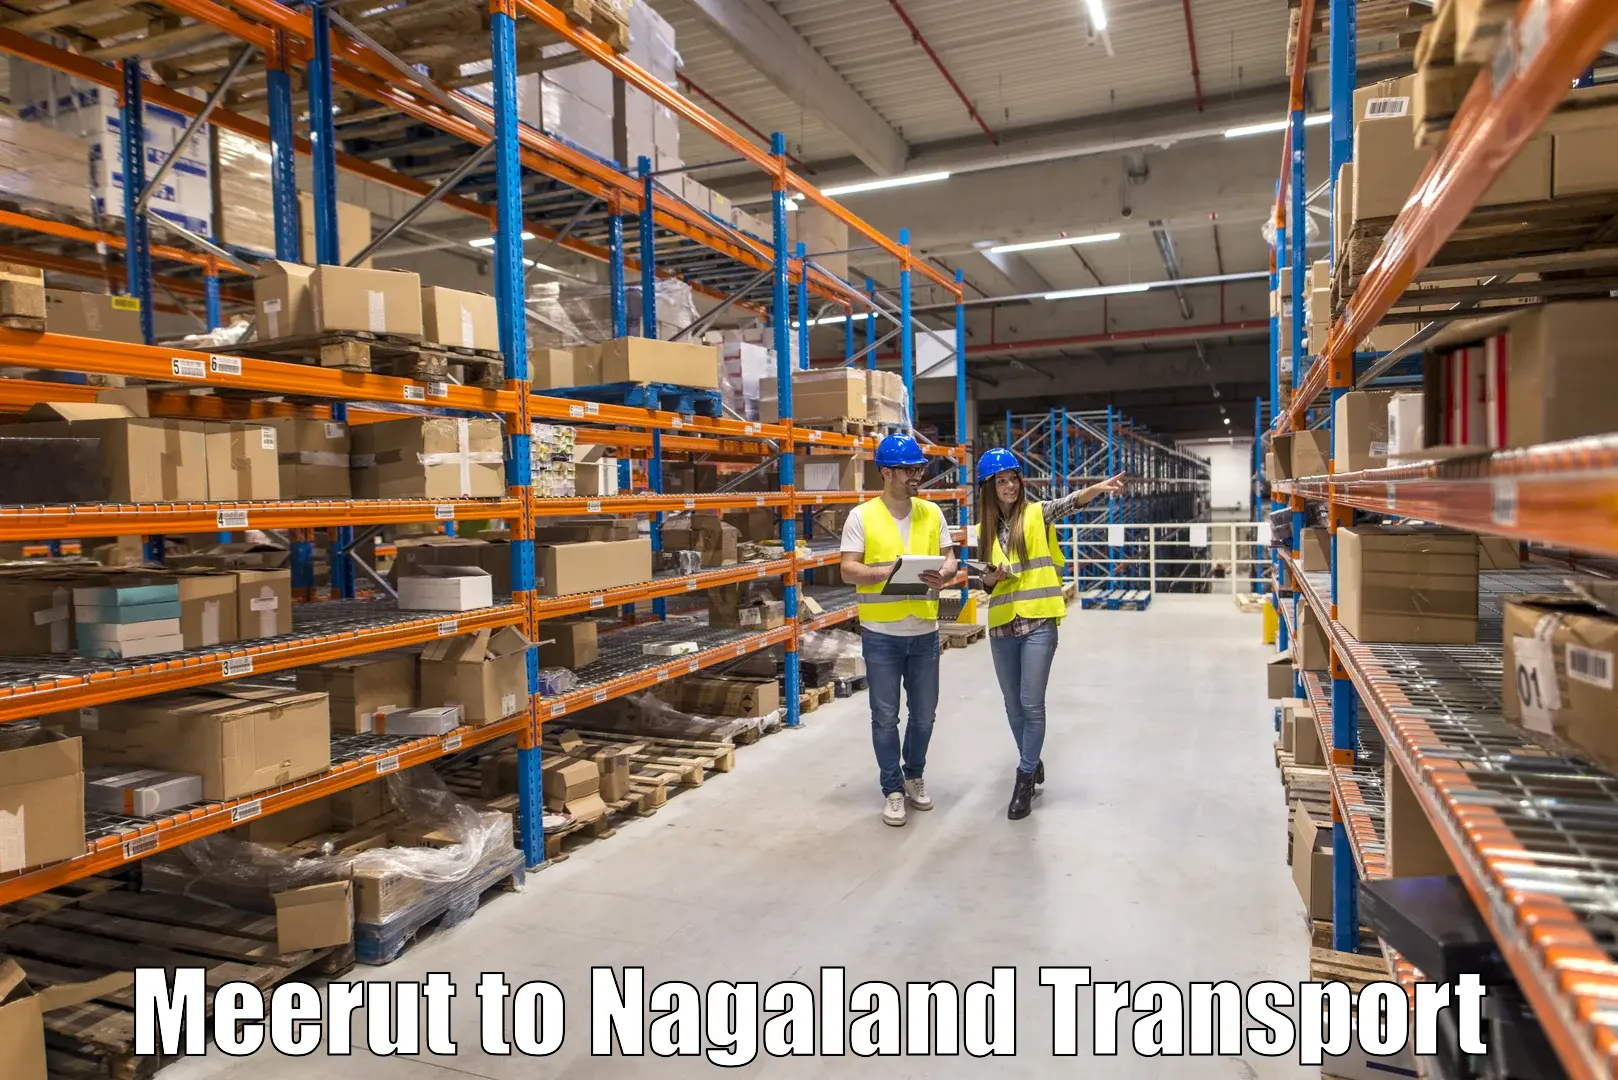 Online transport service Meerut to Nagaland